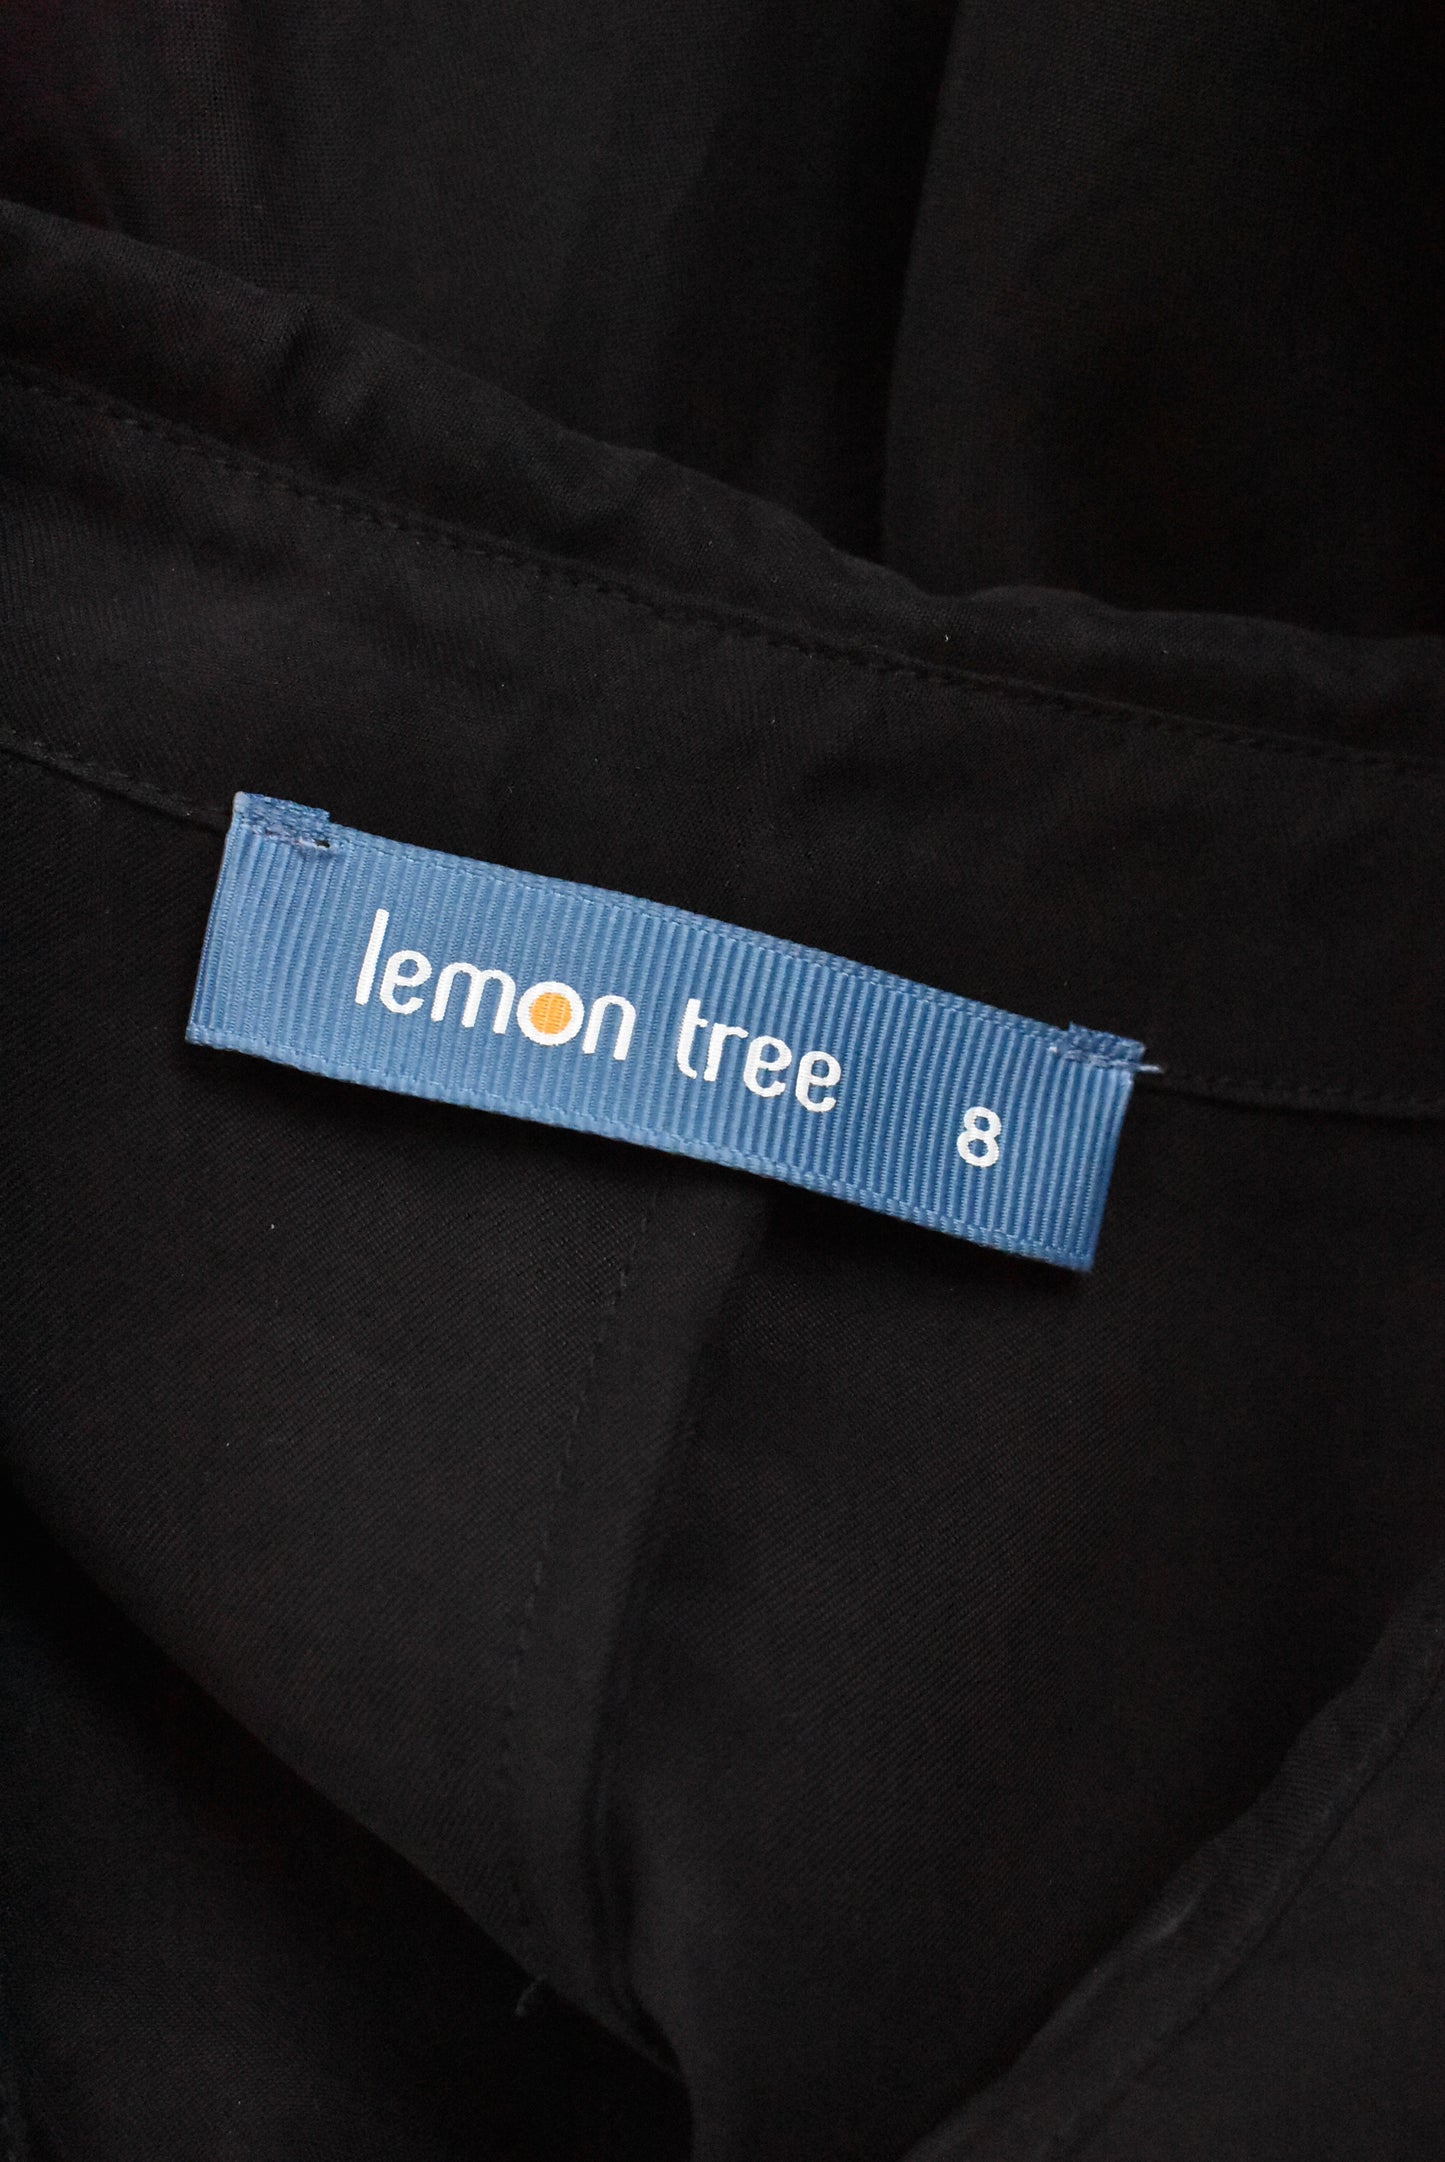 Lemon Tree long sheer tailed shirt/shirtdress, 8